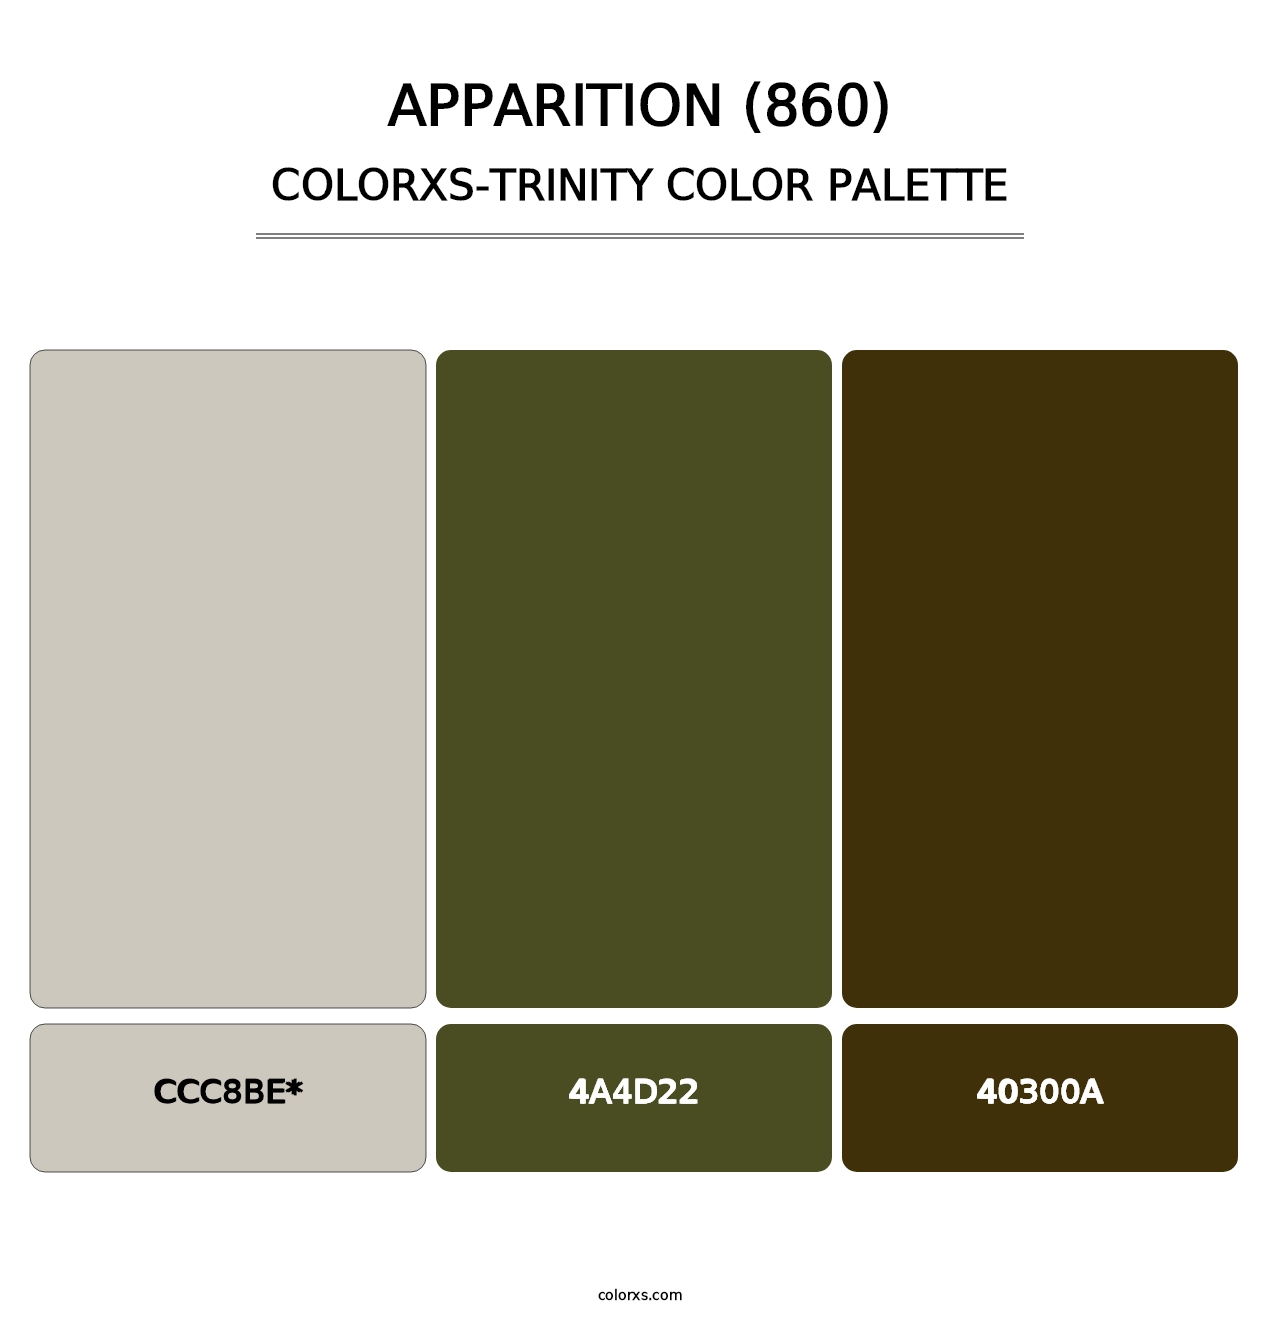 Apparition (860) - Colorxs Trinity Palette